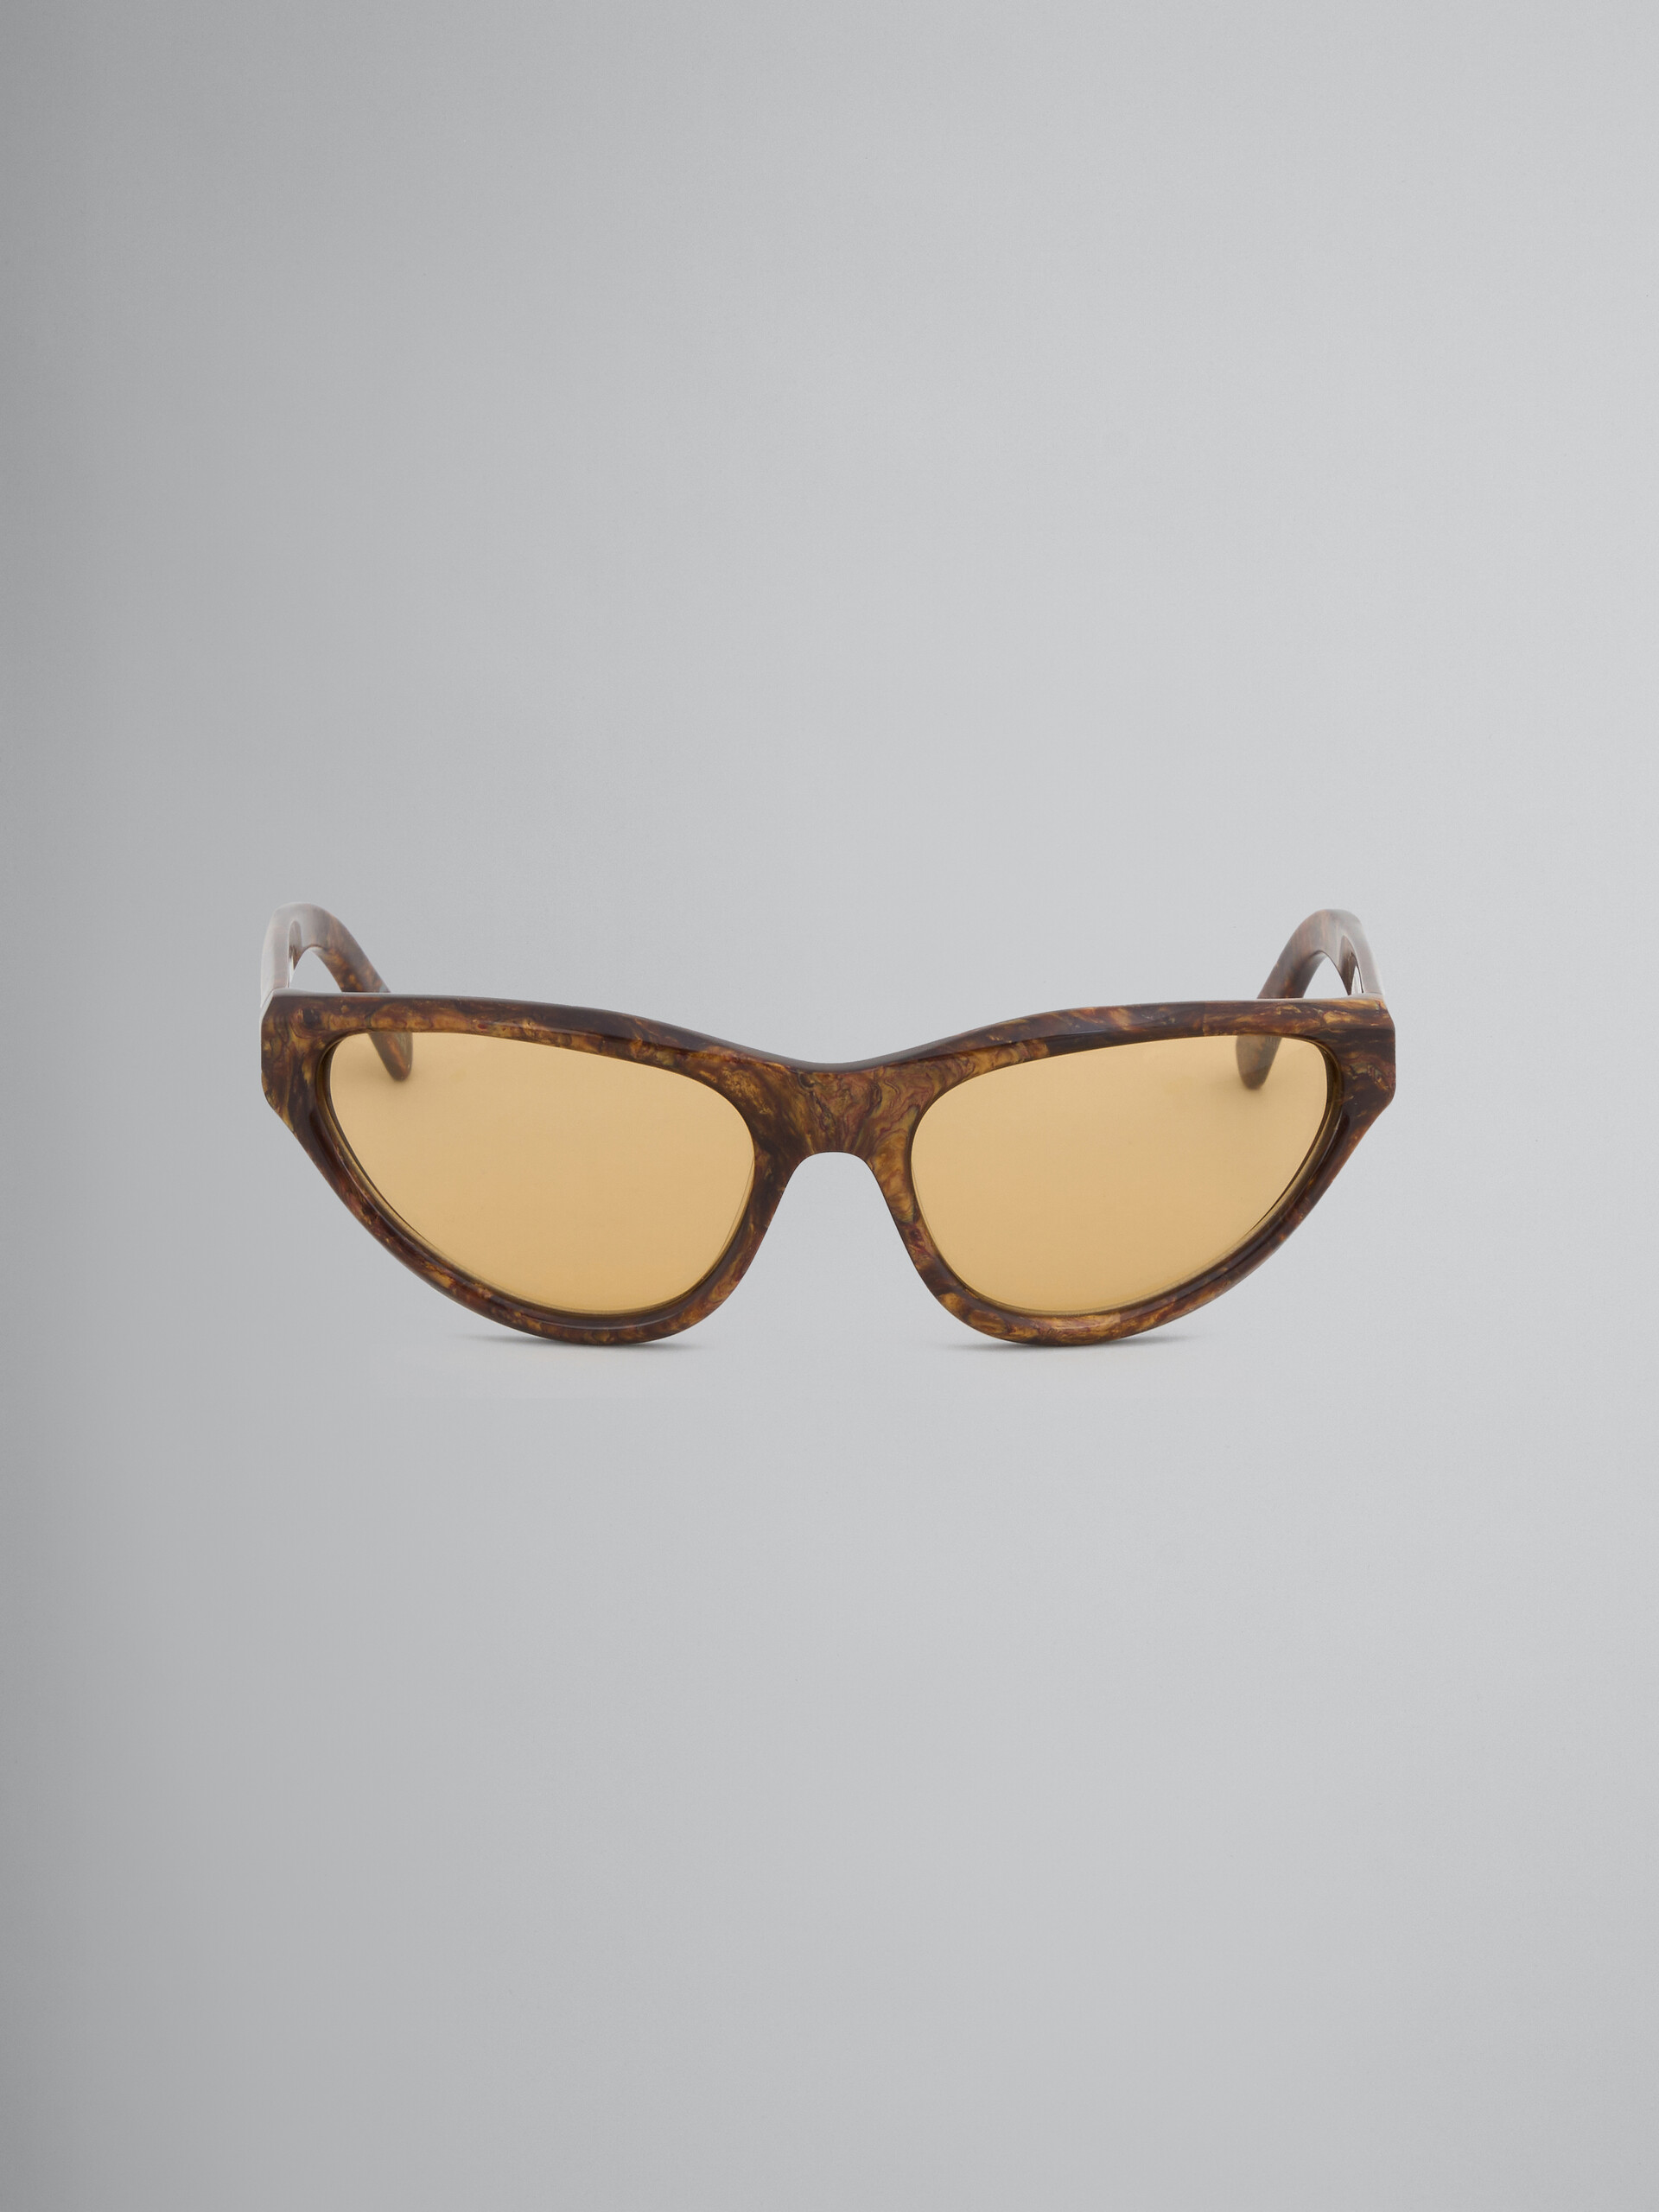 Mavericks black sunglasses - Optical - Image 1